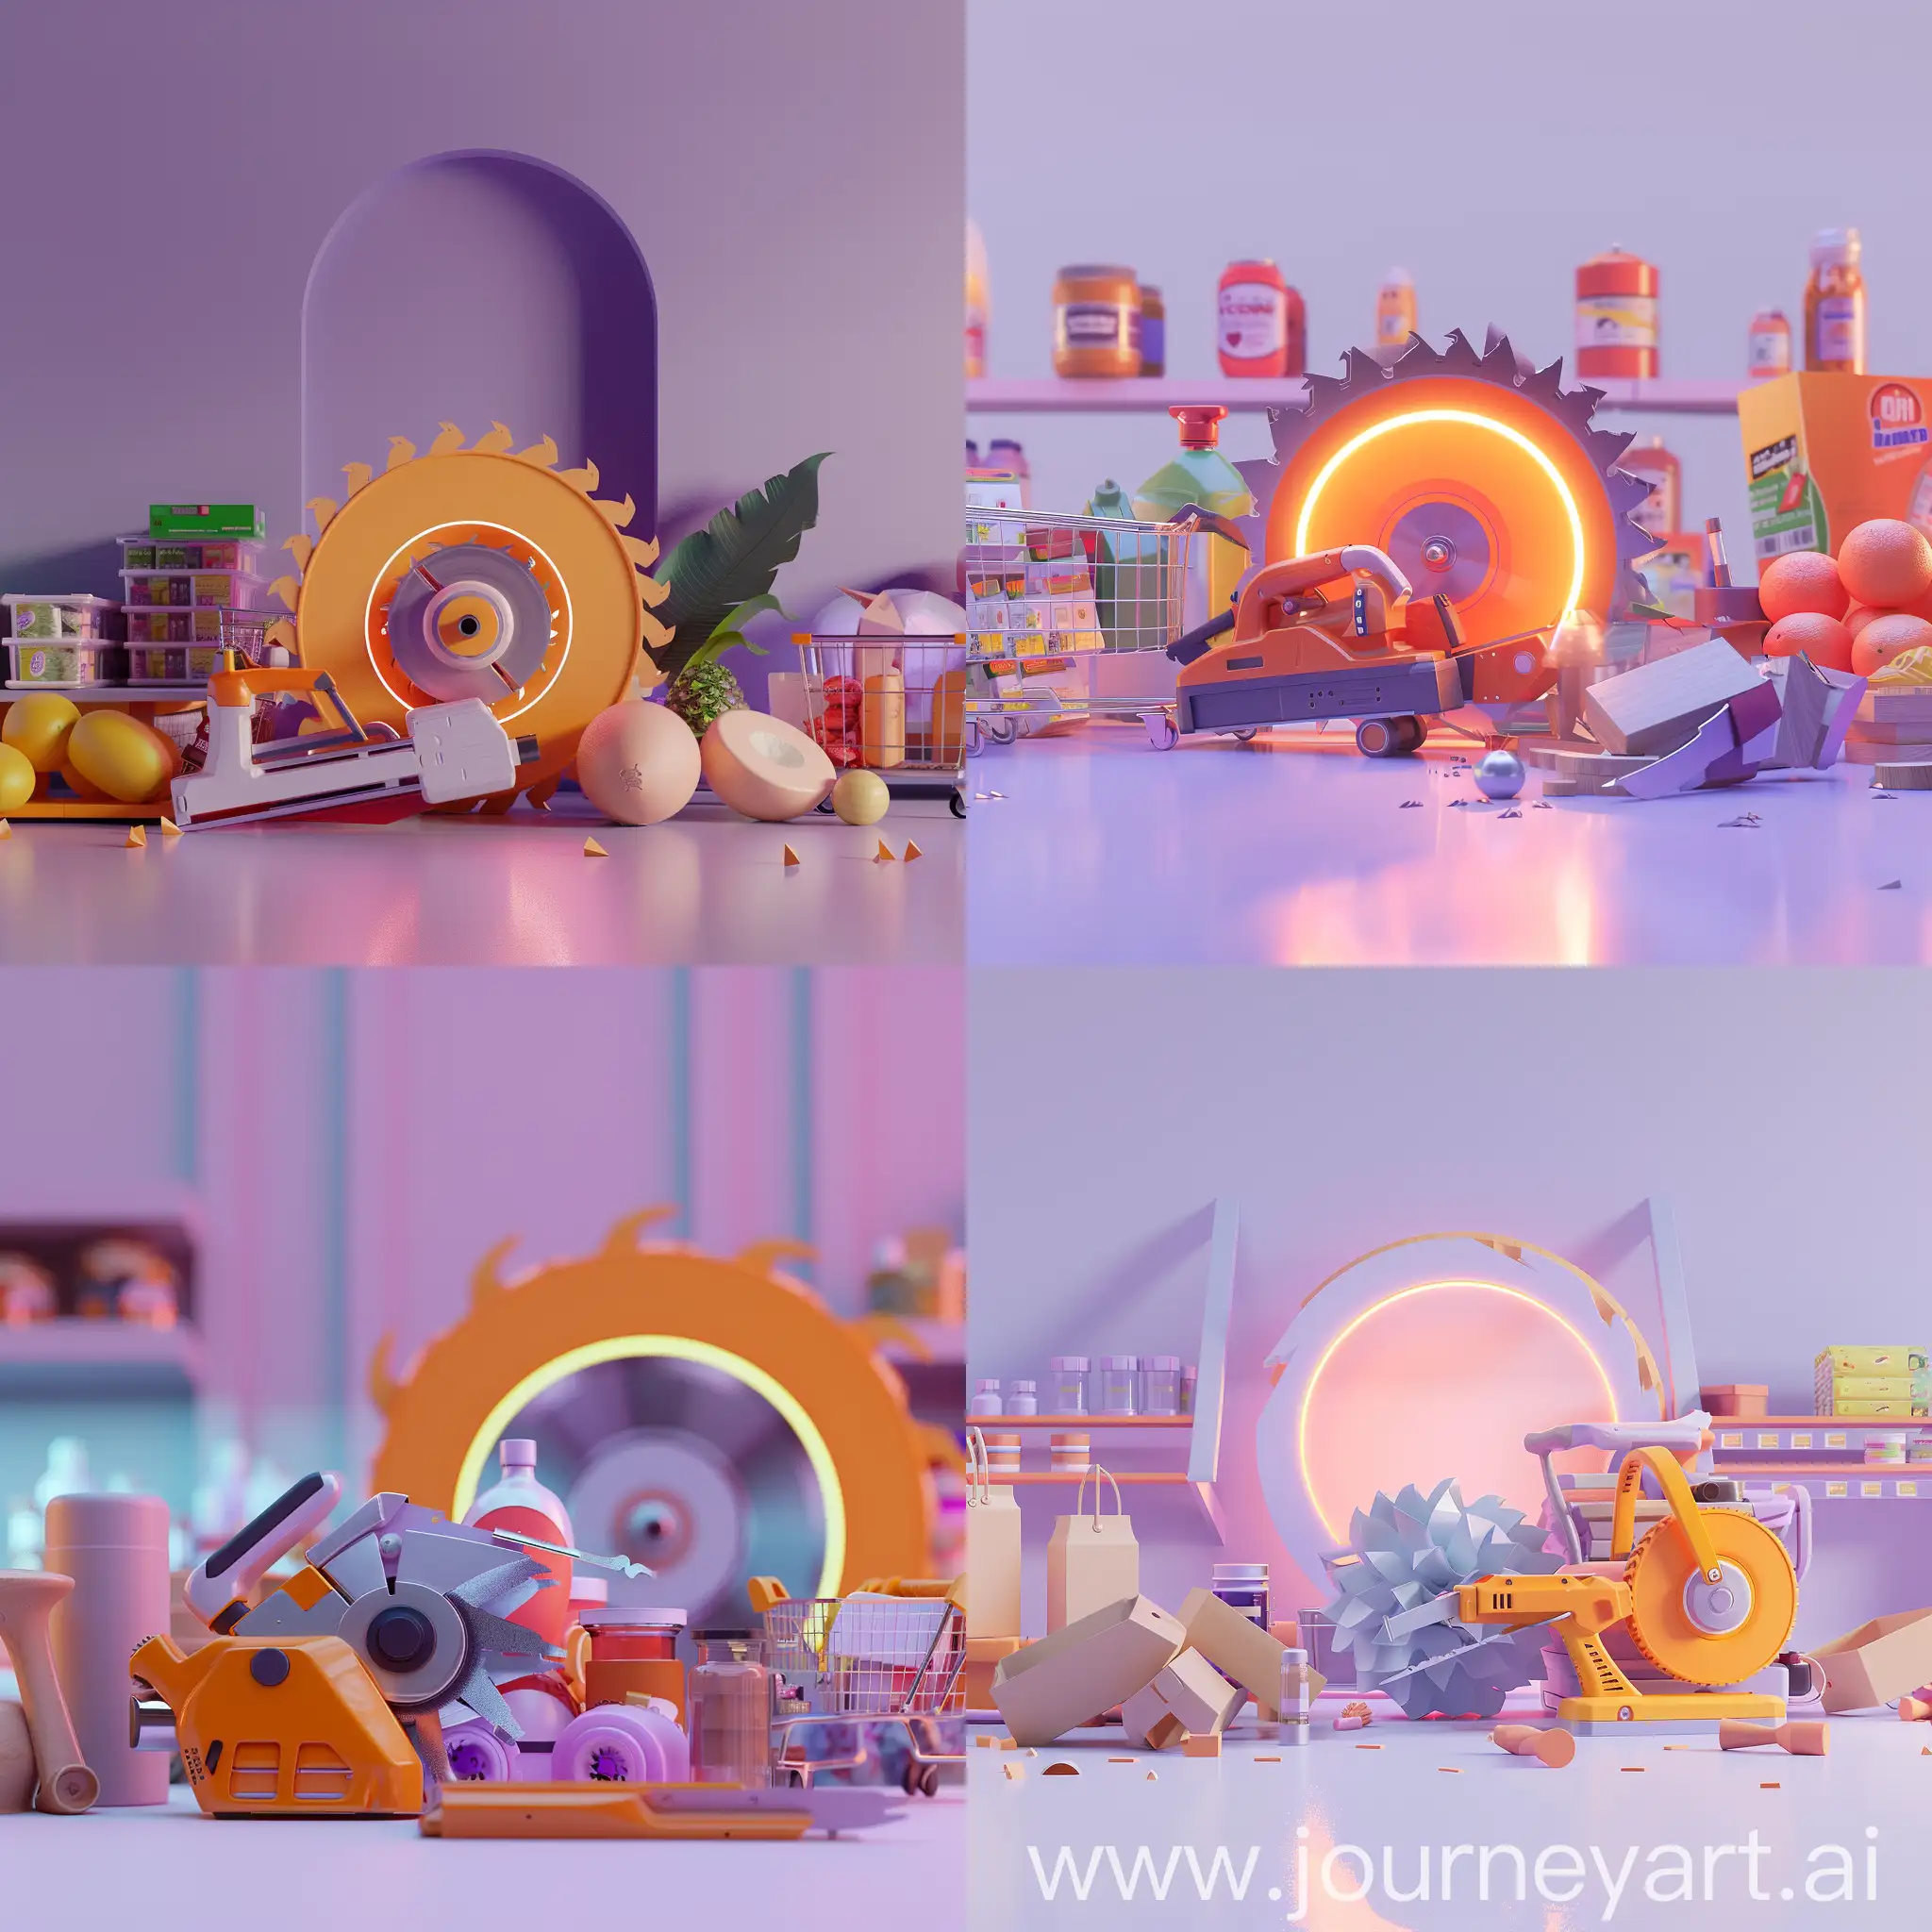 Supermarket-Scene-with-Orange-Circular-Saw-in-Soft-Purple-Lighting